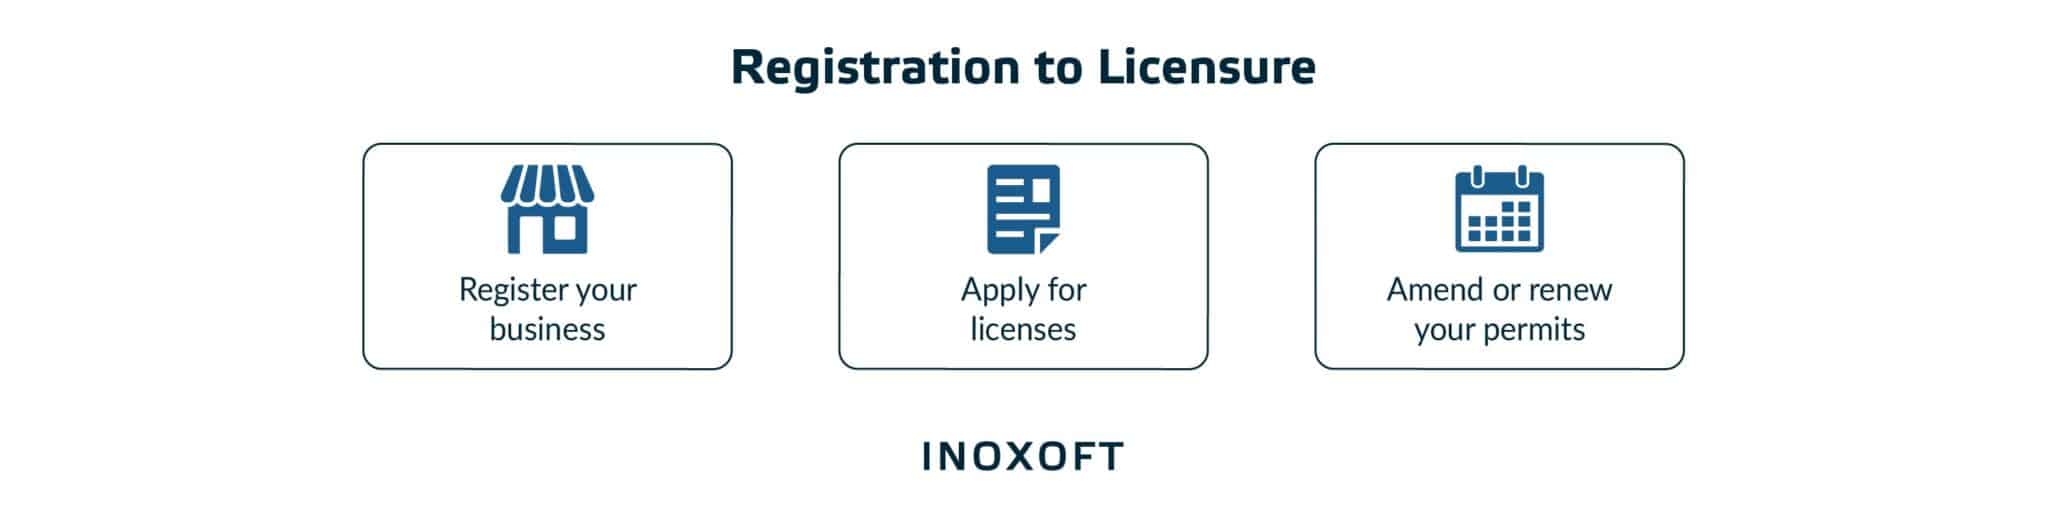 Obtain licenses: registration to licensure